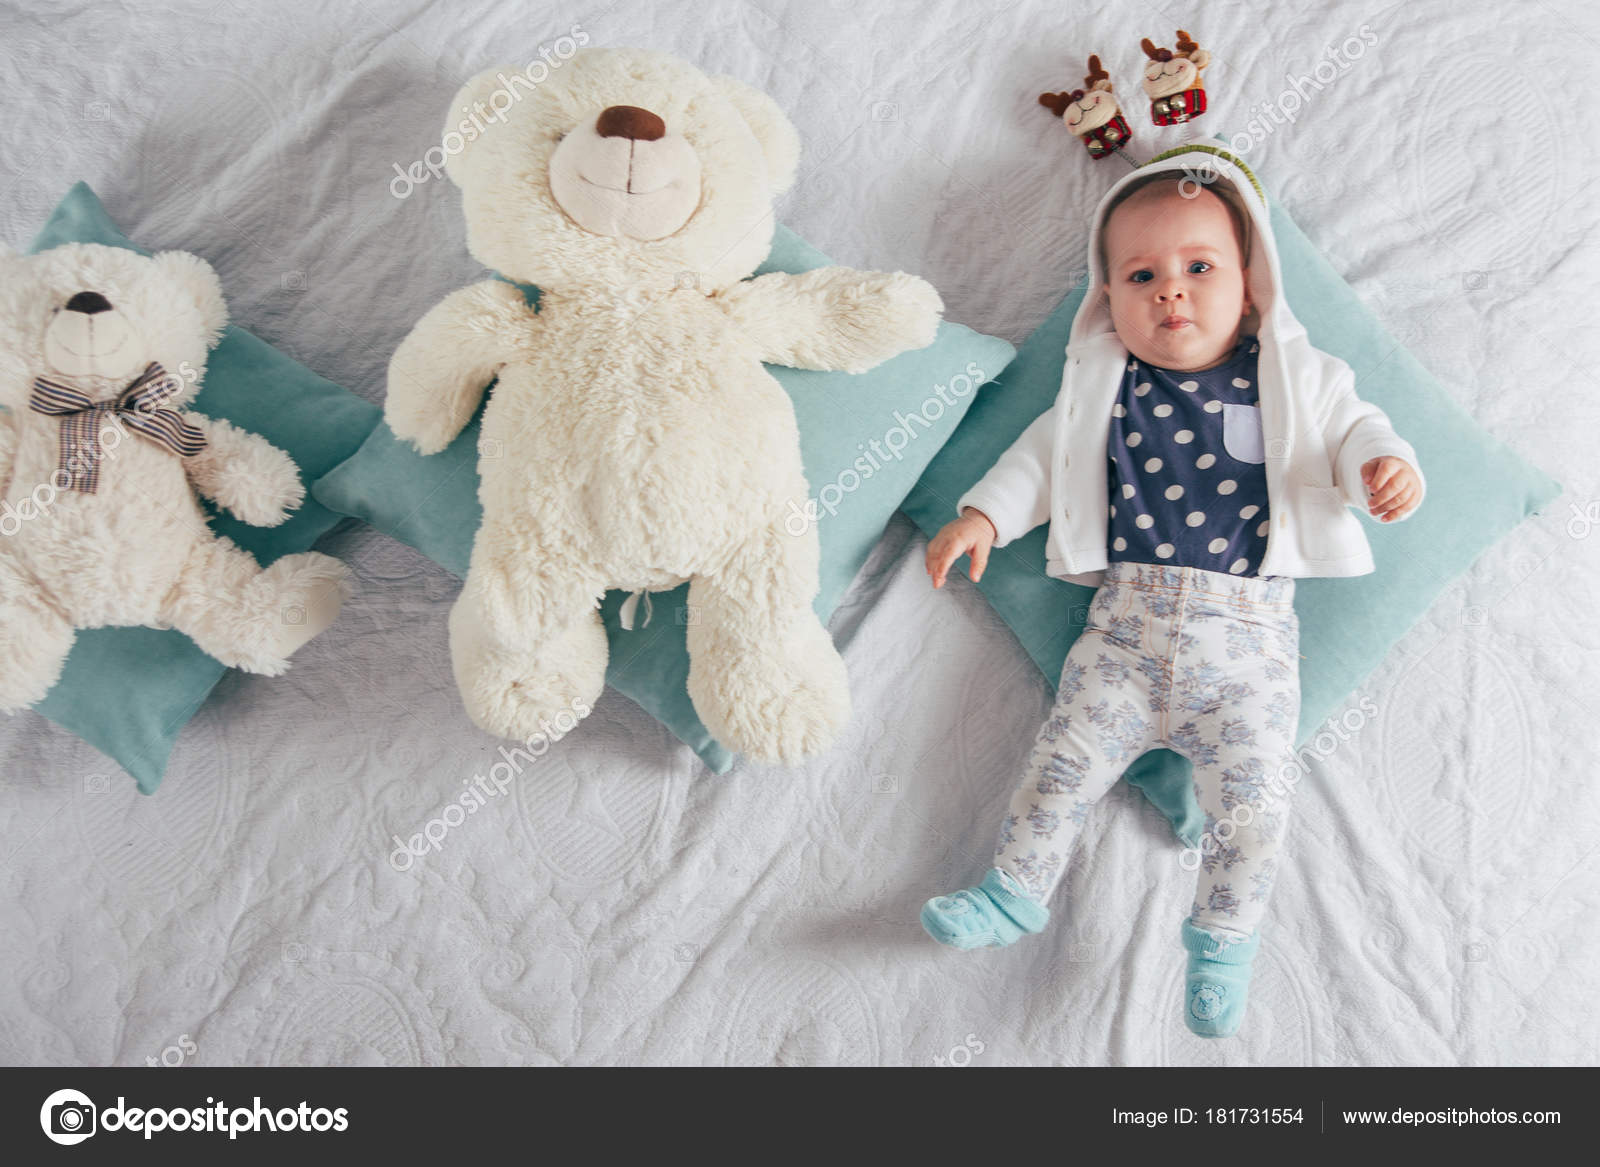 teddy bears for baby girls